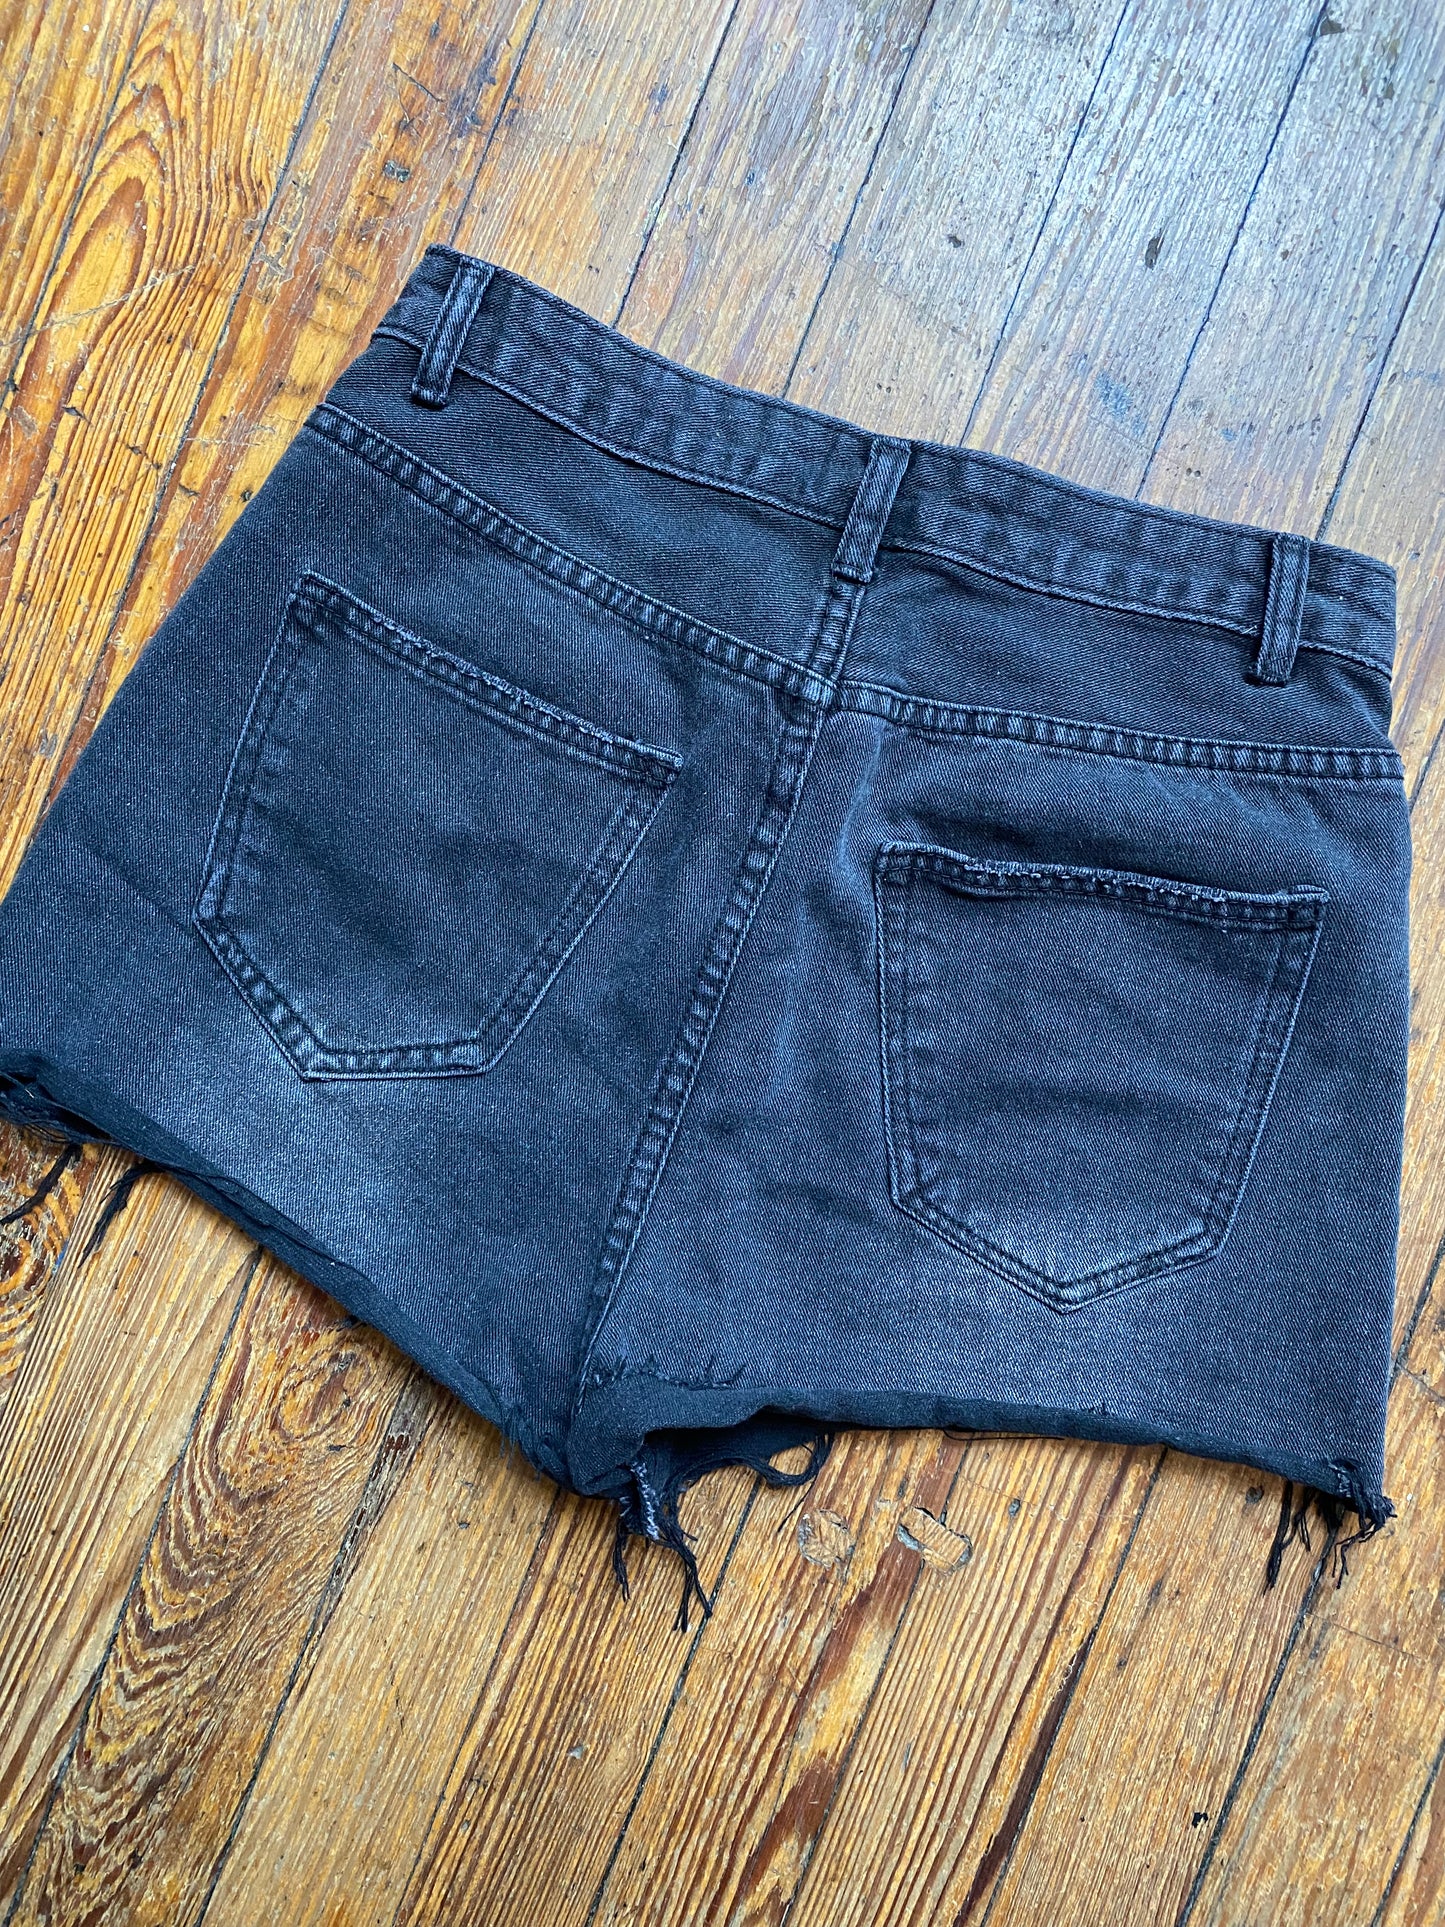 Jeans Brand Black Denim Shorts